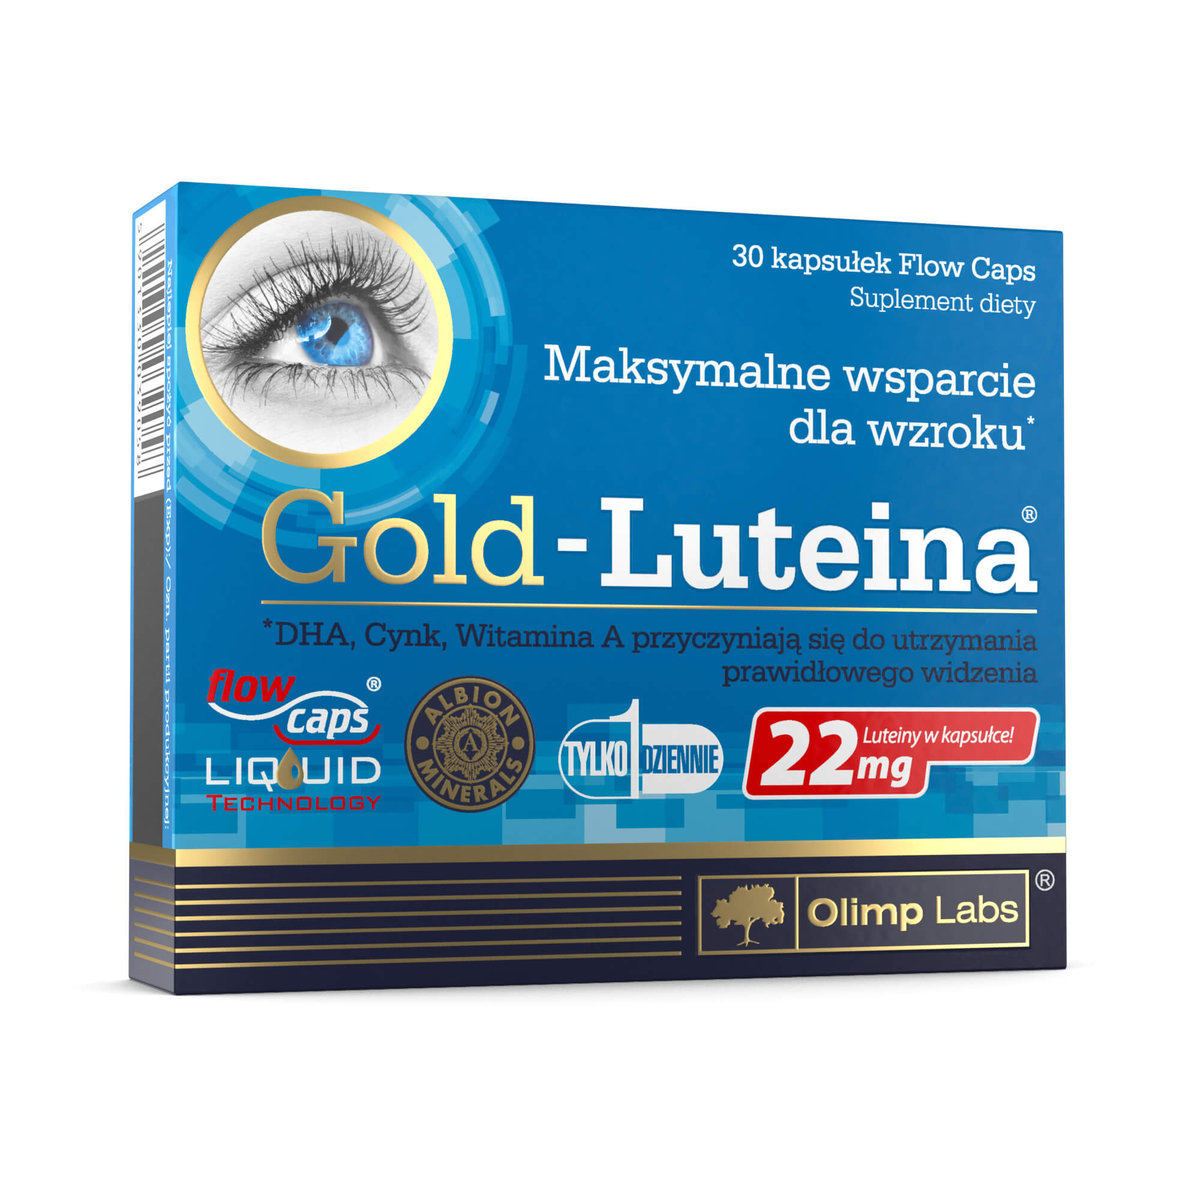 Olimp LABORATORIES Gold-Luteina 30 kapsułek